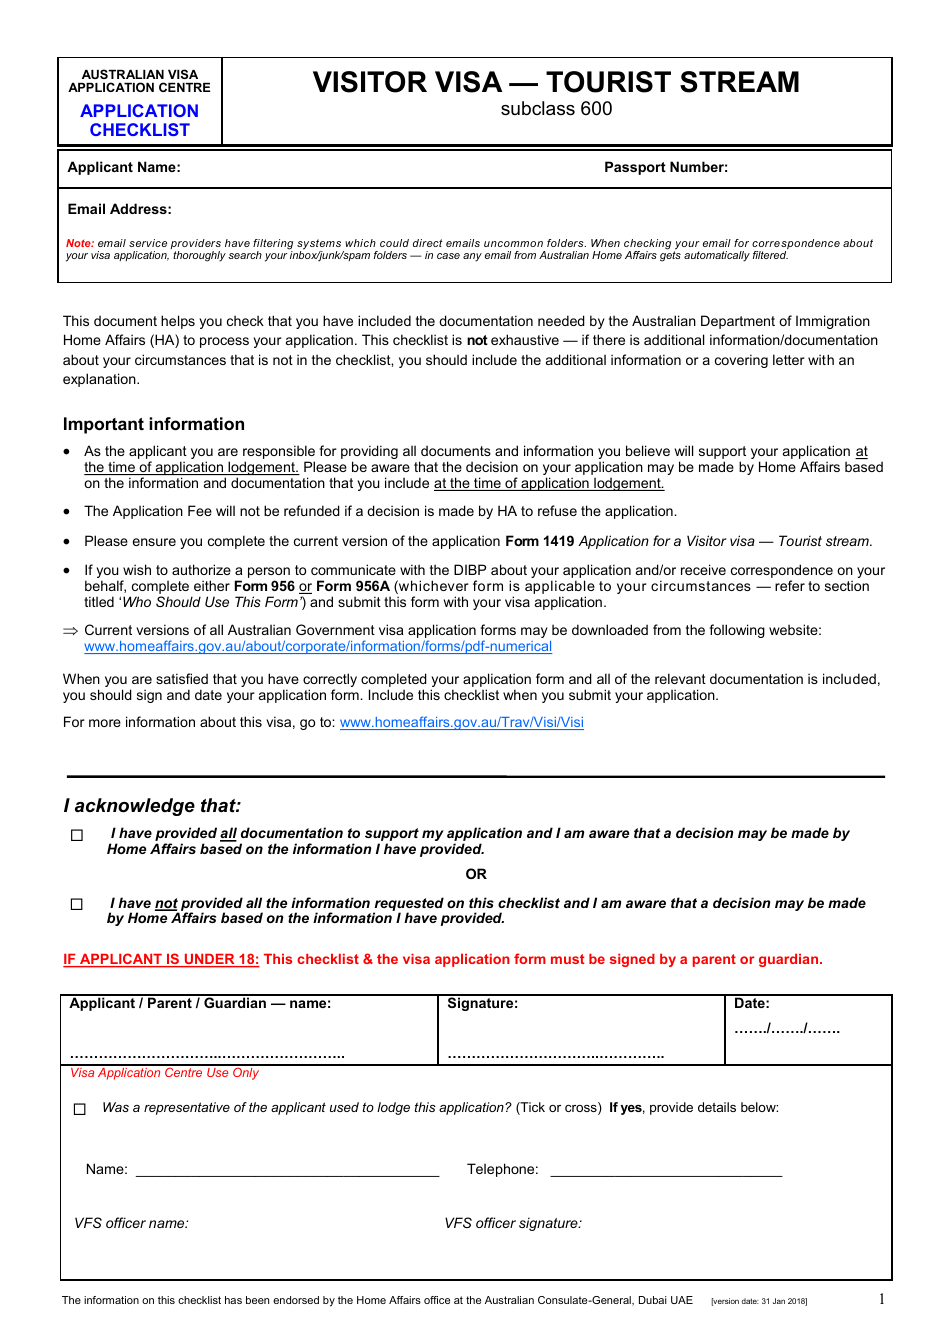 Dubai United Arab Emirates Australian Visa Application Checklist - Australian Visa Application Centre Download Printable PDF | Templateroller